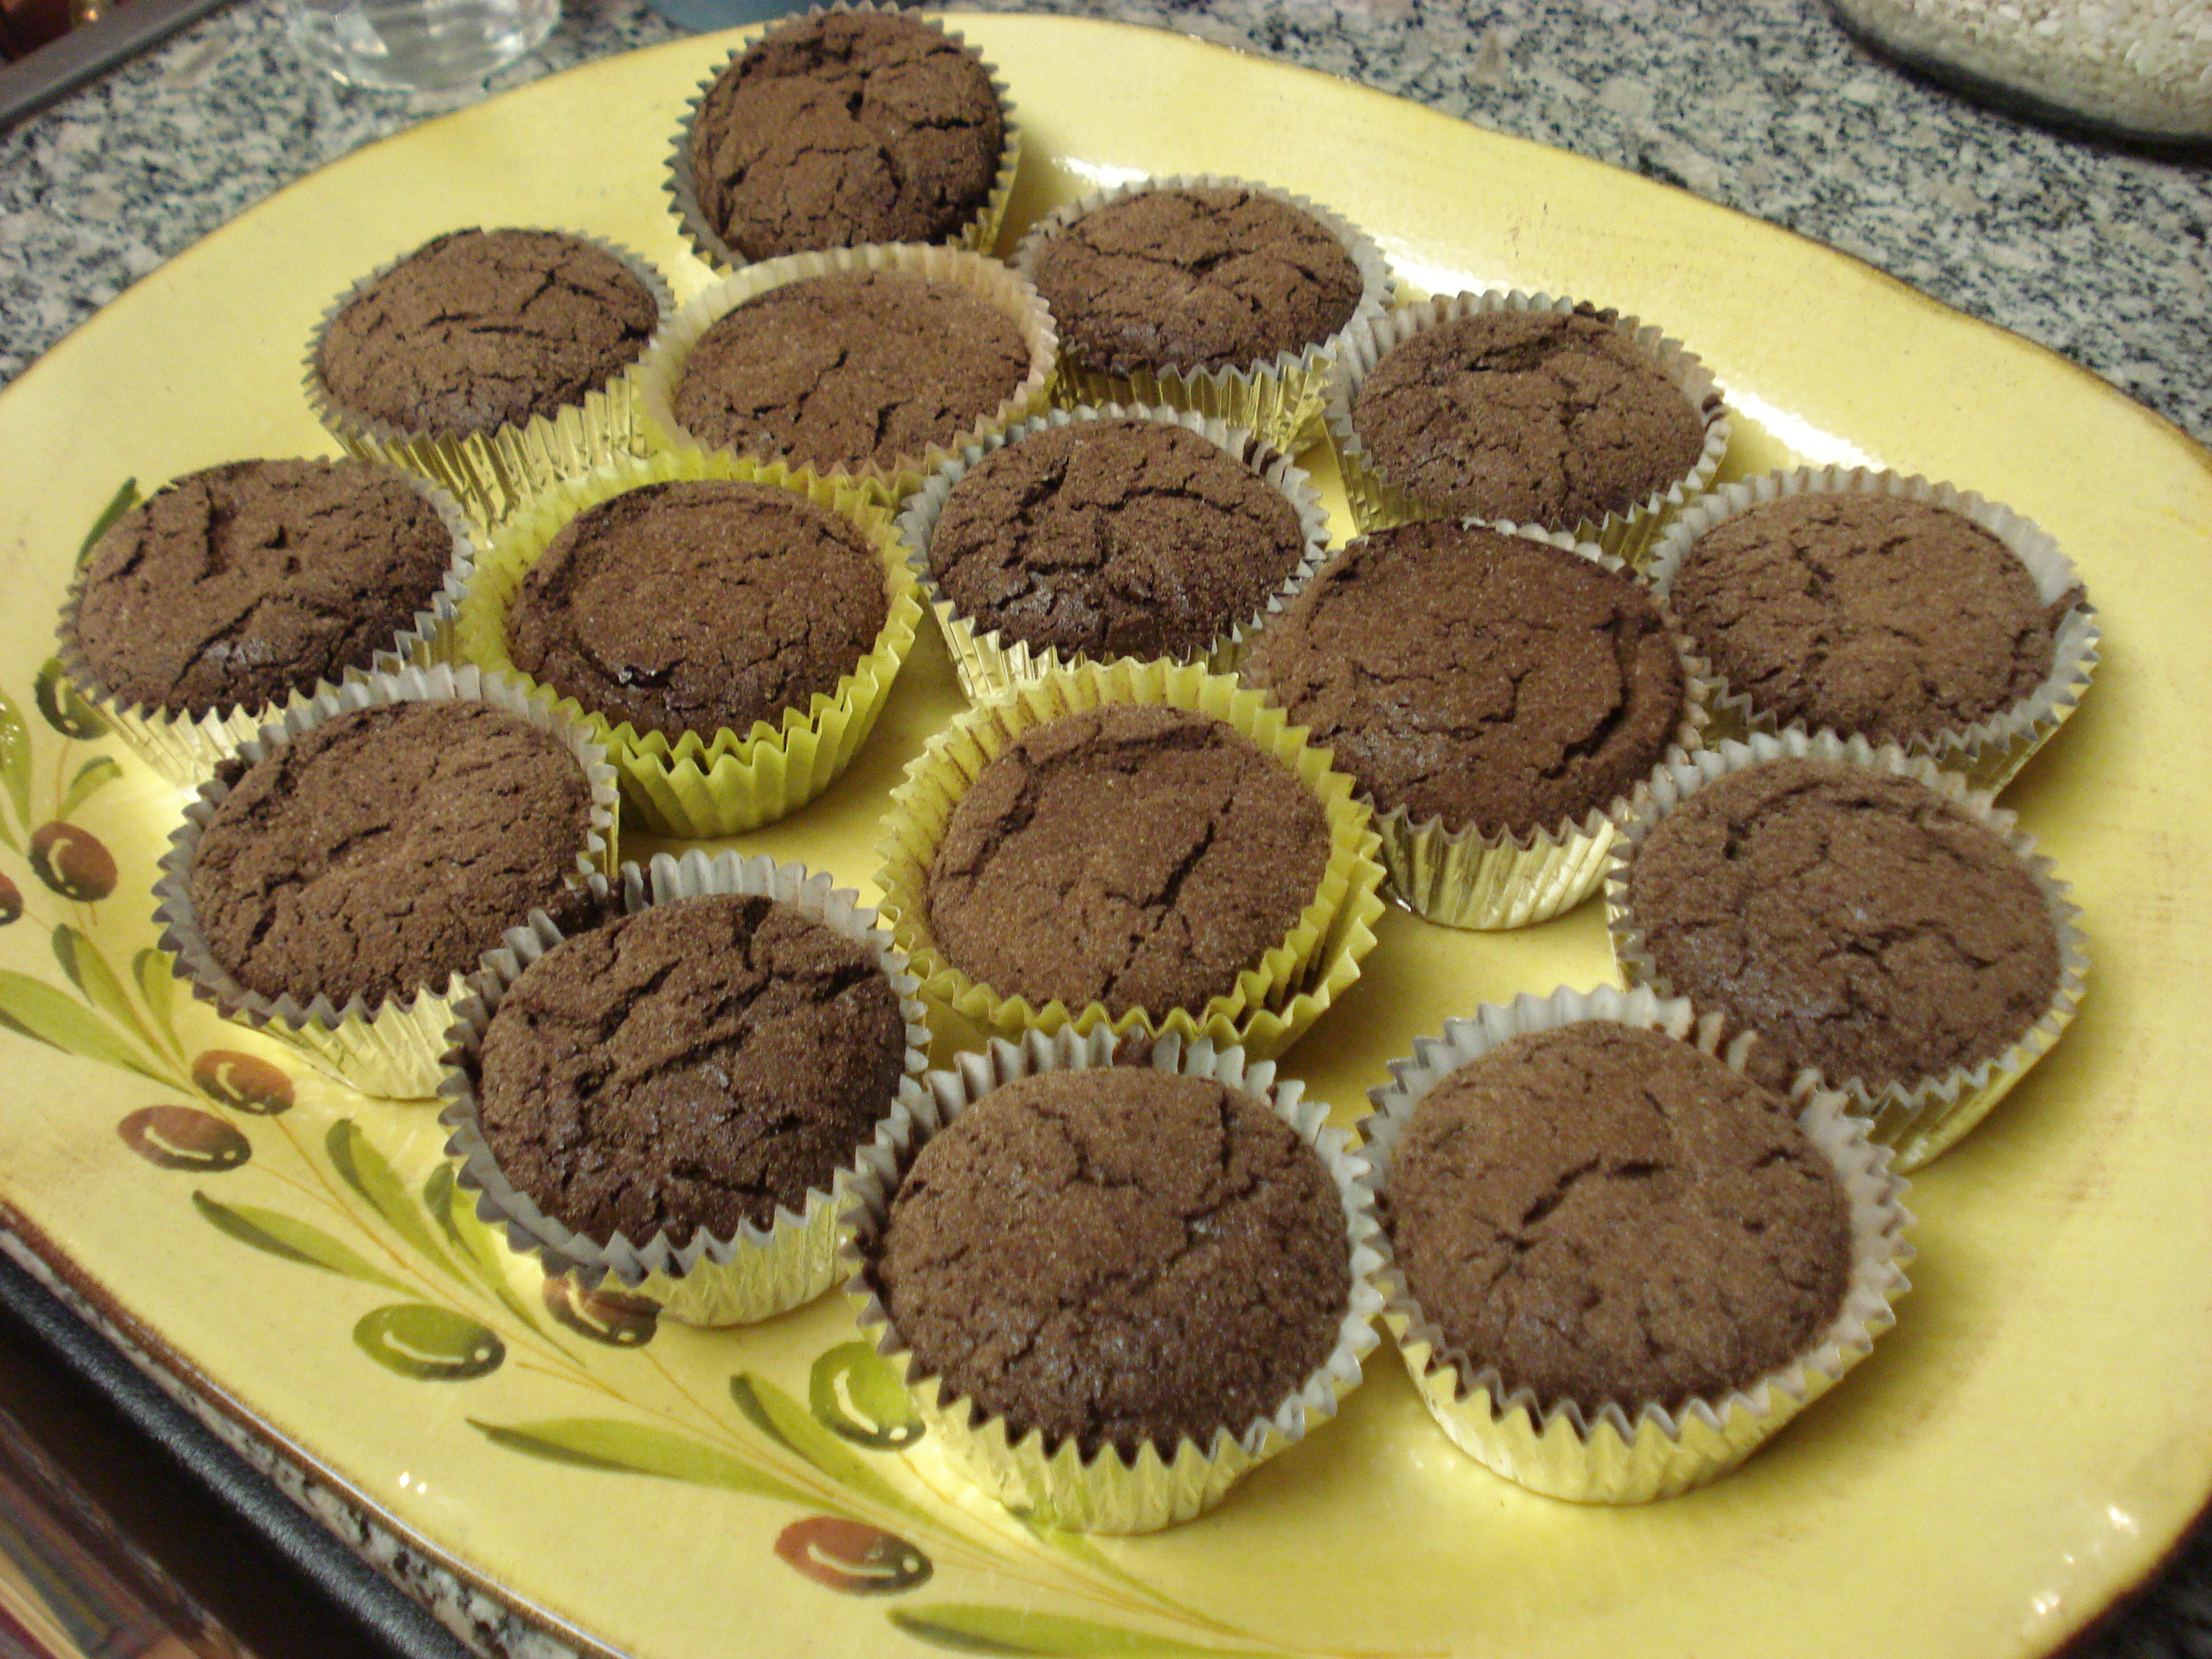 Exquisite Chocolate Soufflé Cupcakes